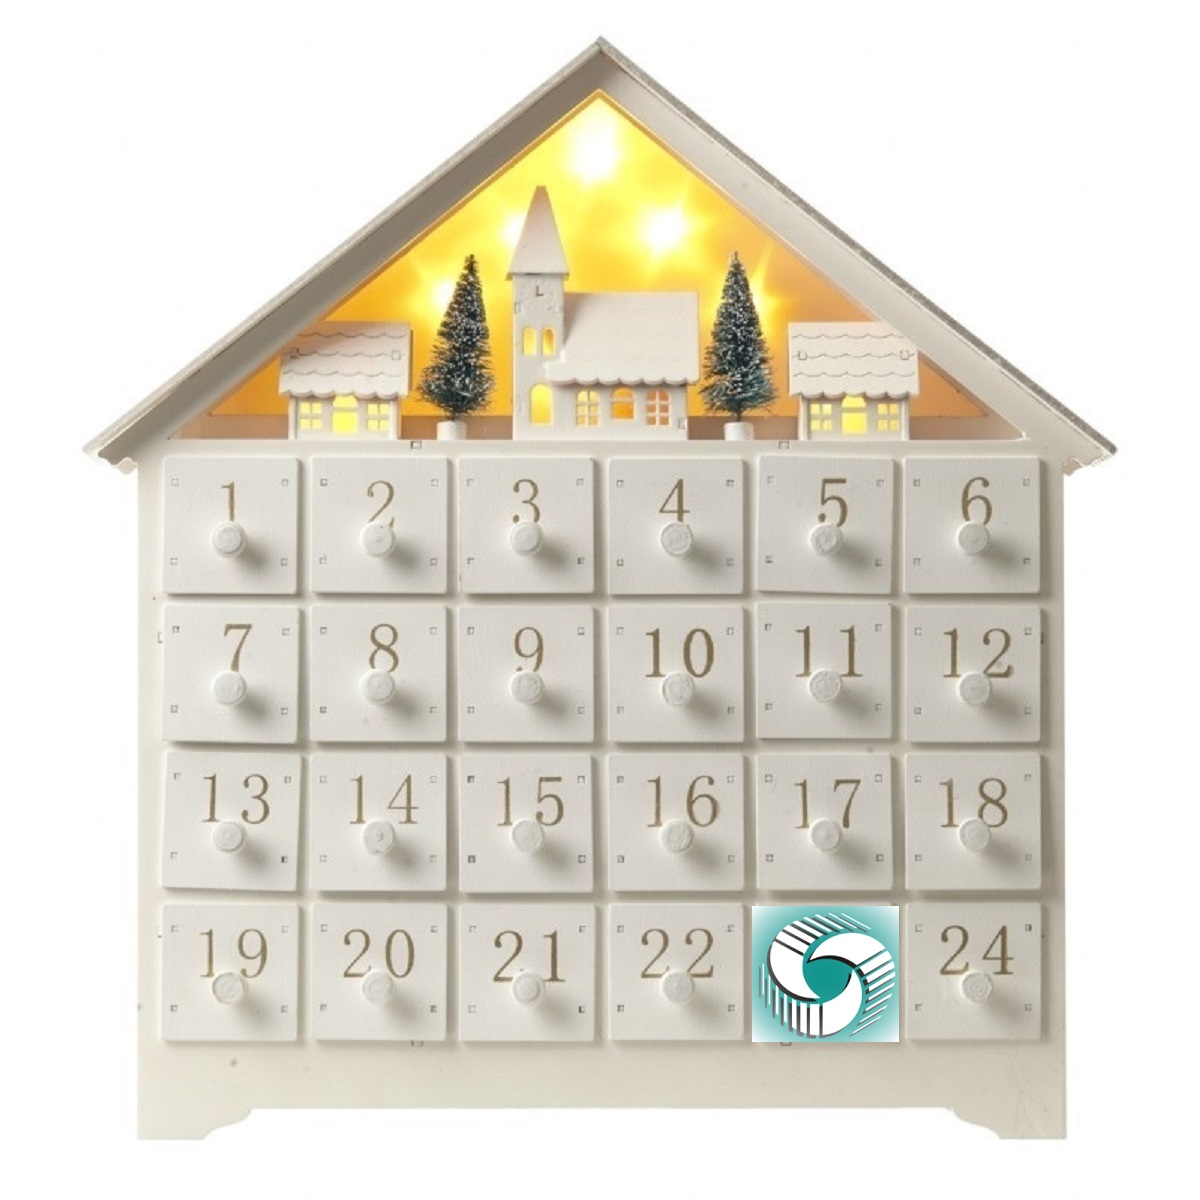 Day 23 – Frontier’s Advent Calendar